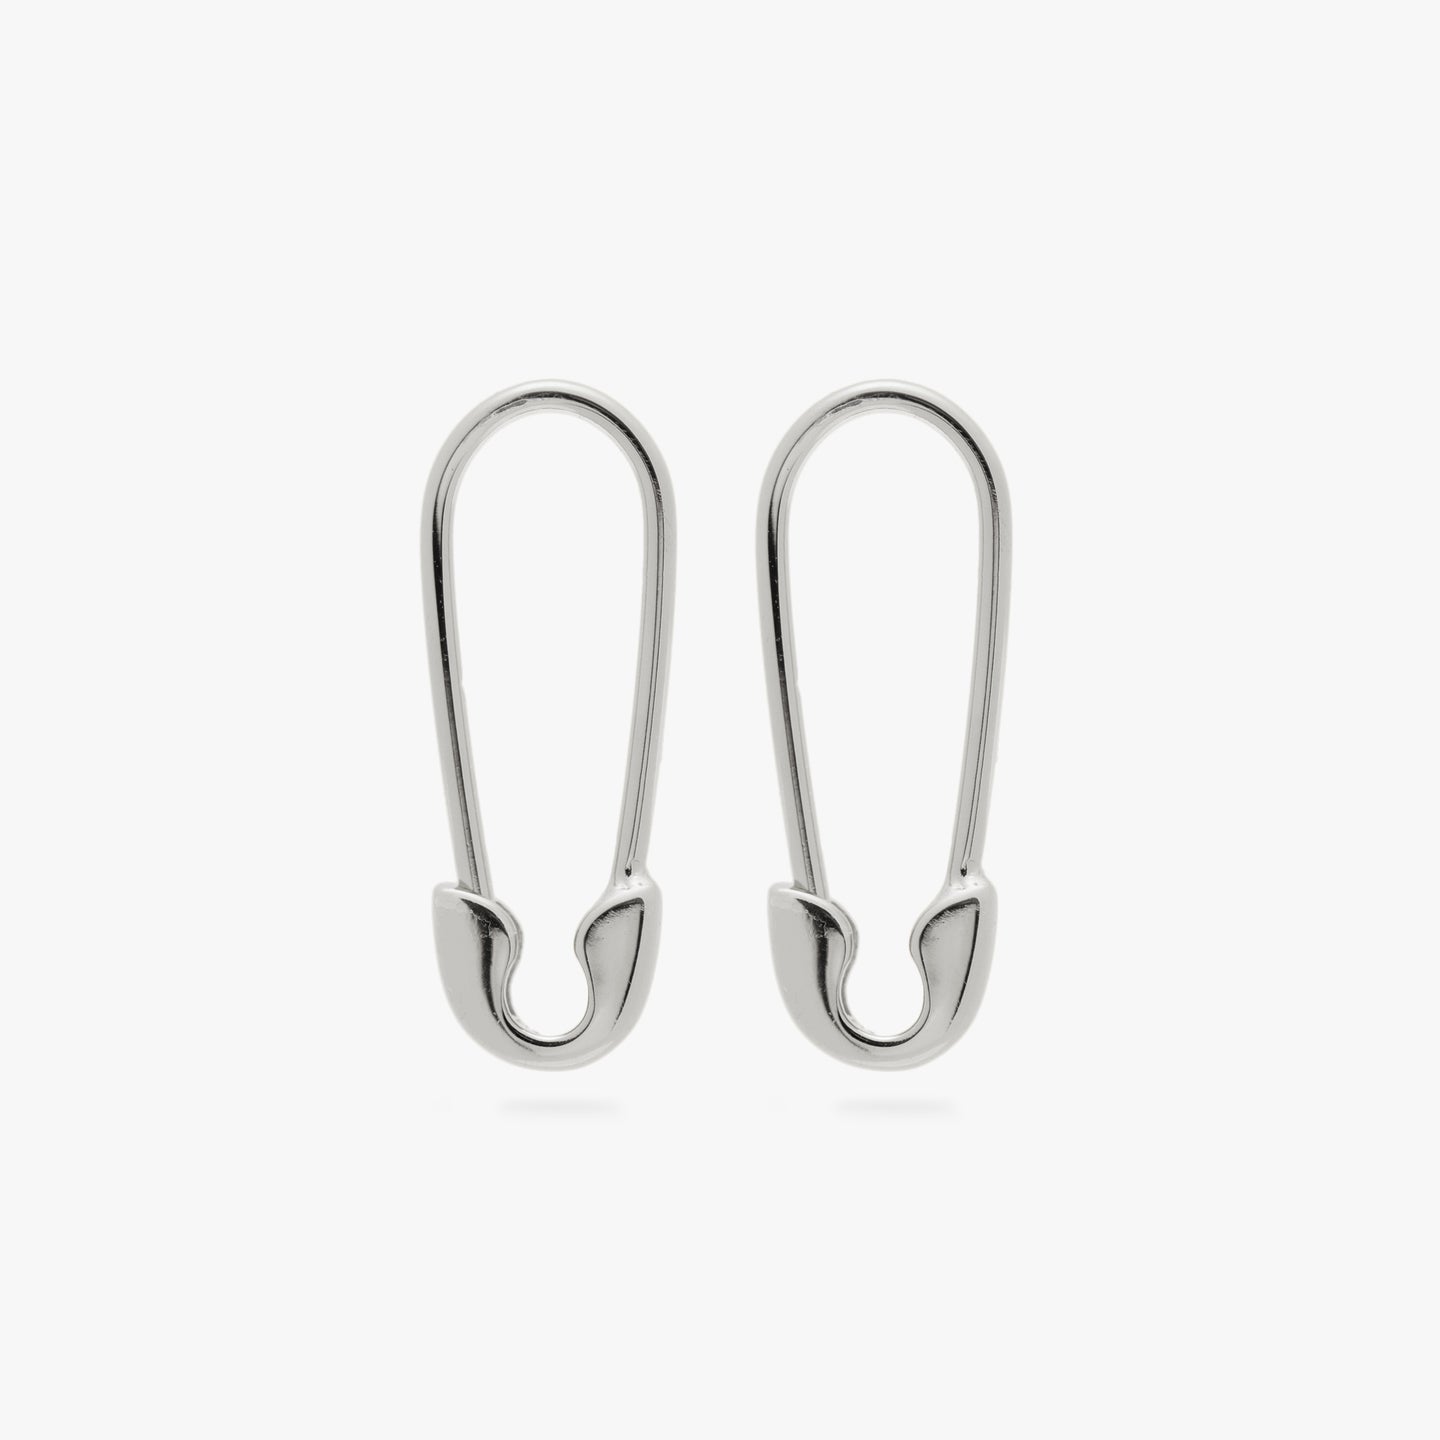 SNARE PIN EARRINGS | Earrings | Dangle Earrings – Ask and Embla